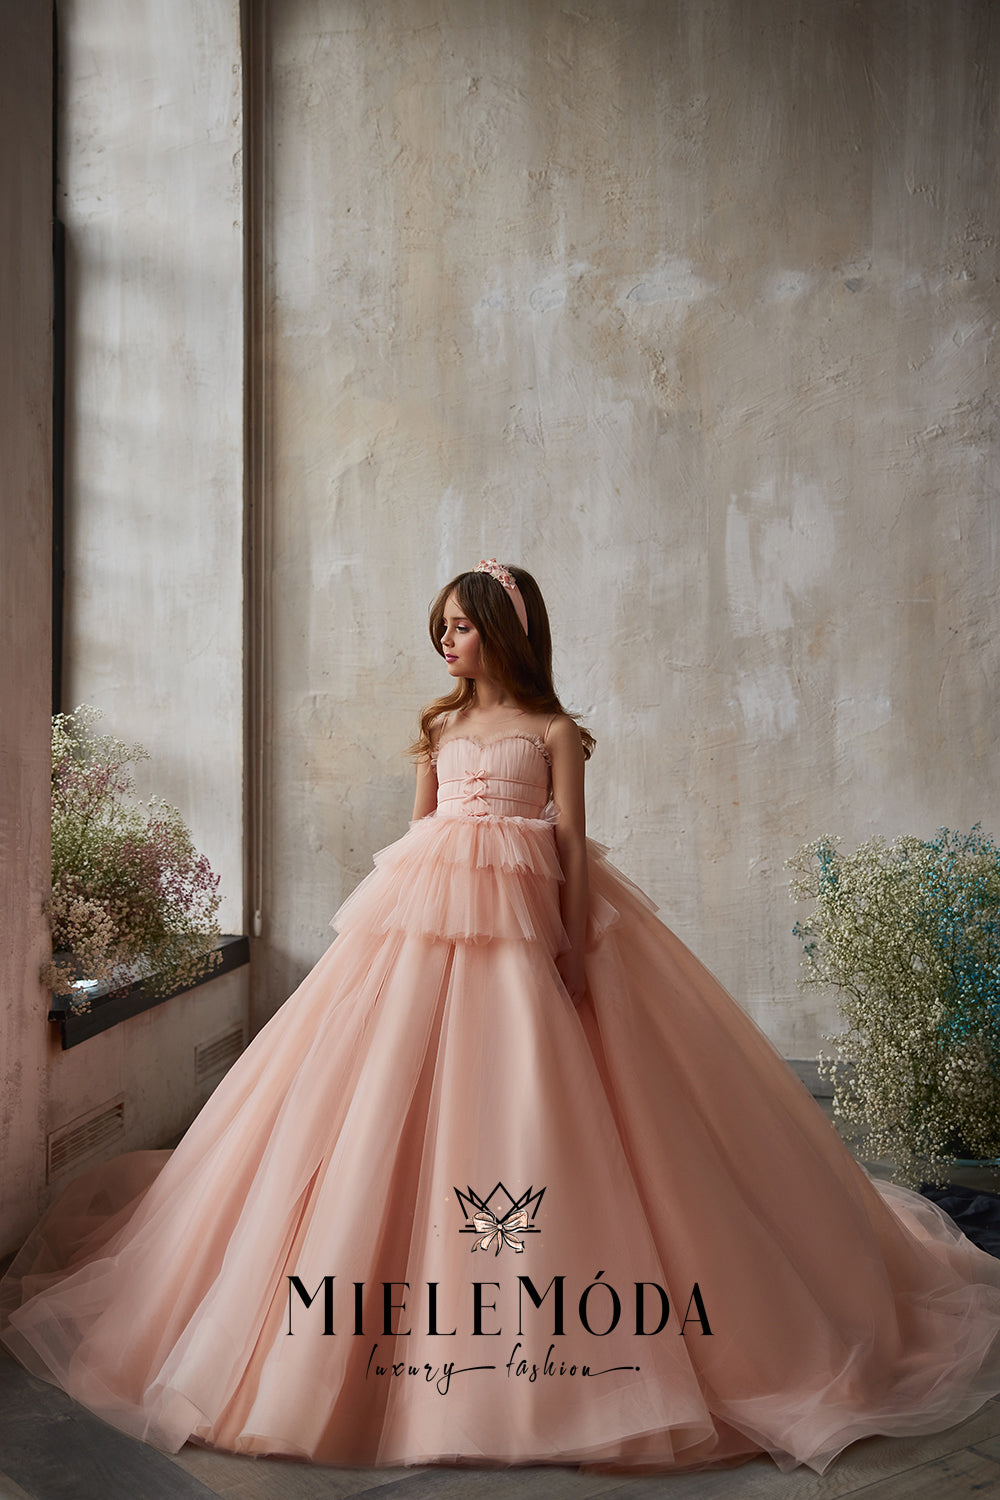 Aurora Couture Princess Birthday Dress - Miele Moda Luxury Fashion